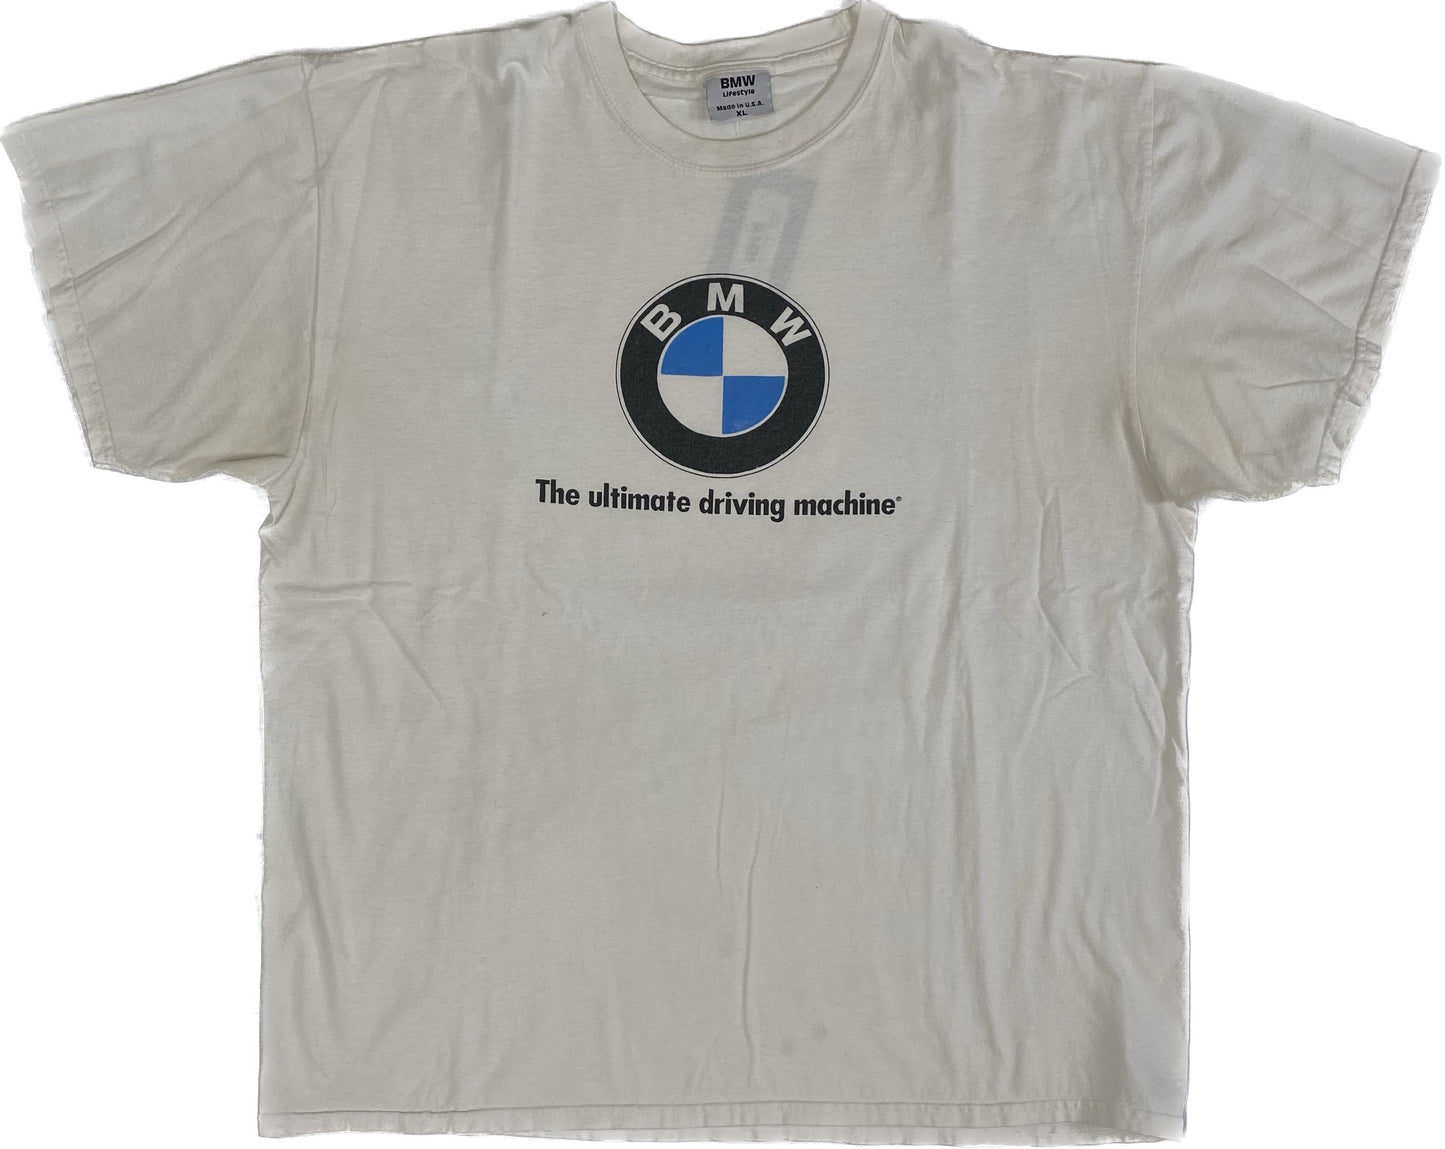 90’s BMW Logo ‘The ultimate driving machine’ T-shirt Sz XL (A1330)